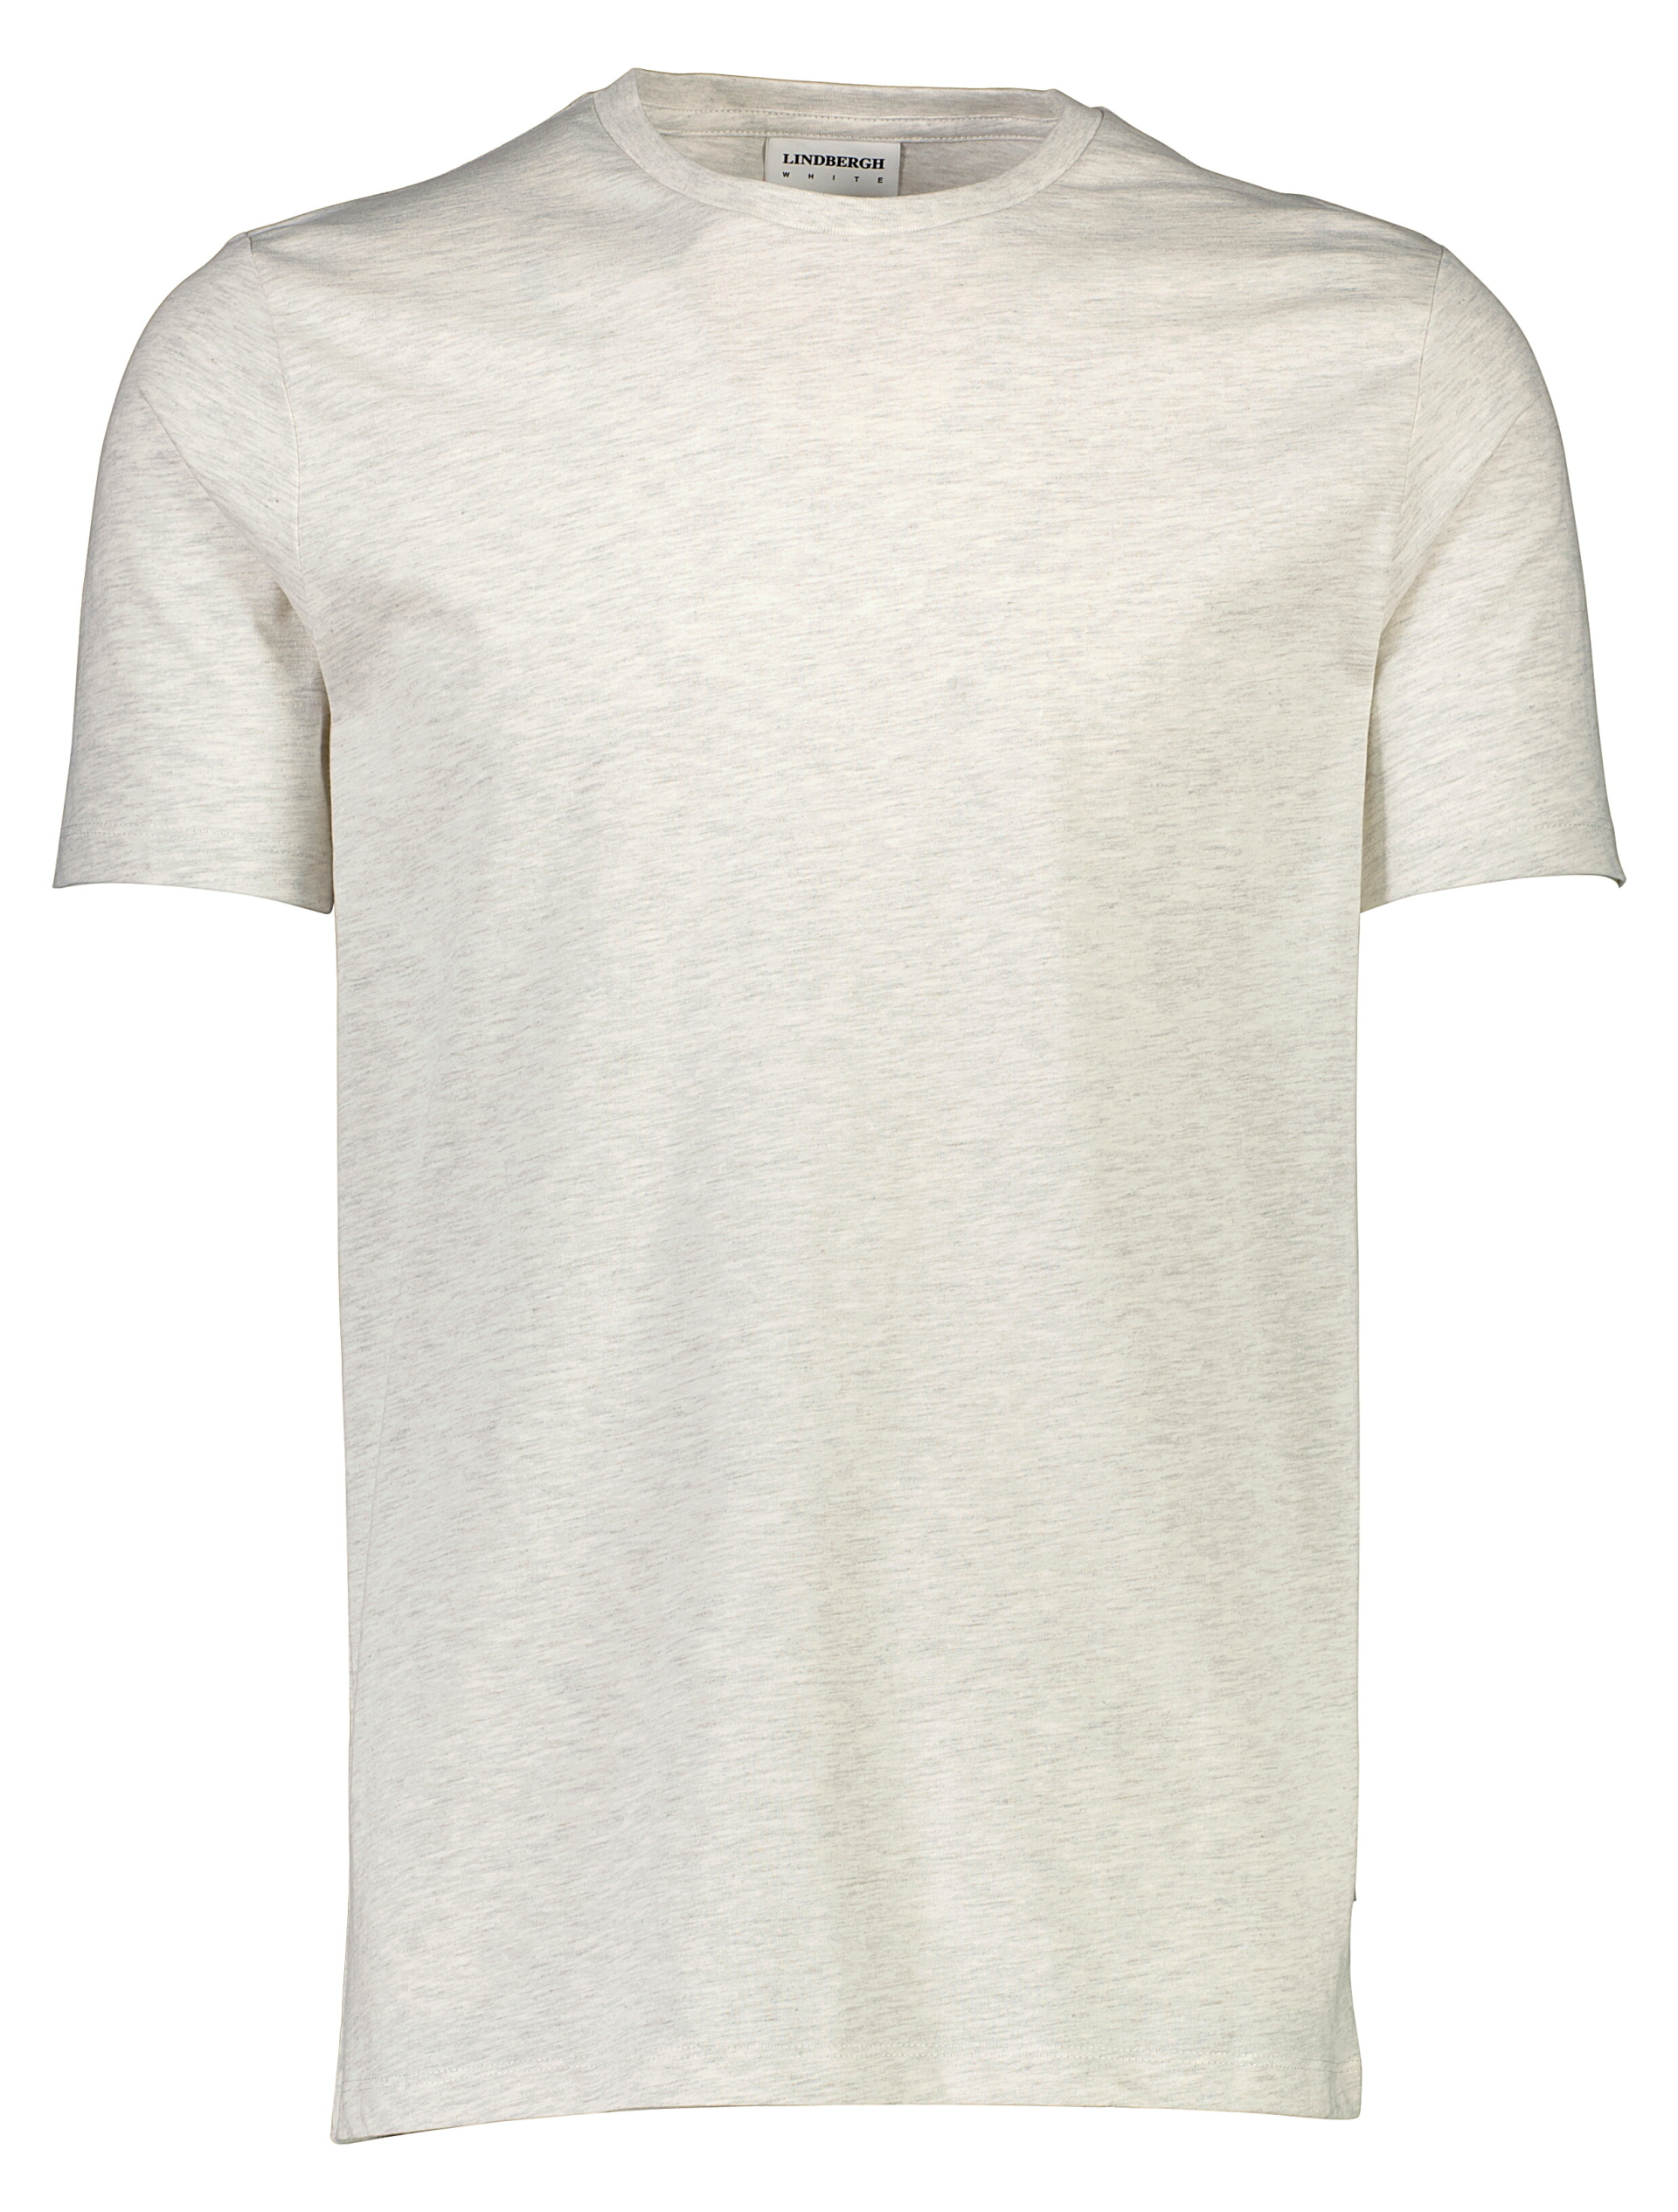 Lindbergh T-shirt vit / off white mel